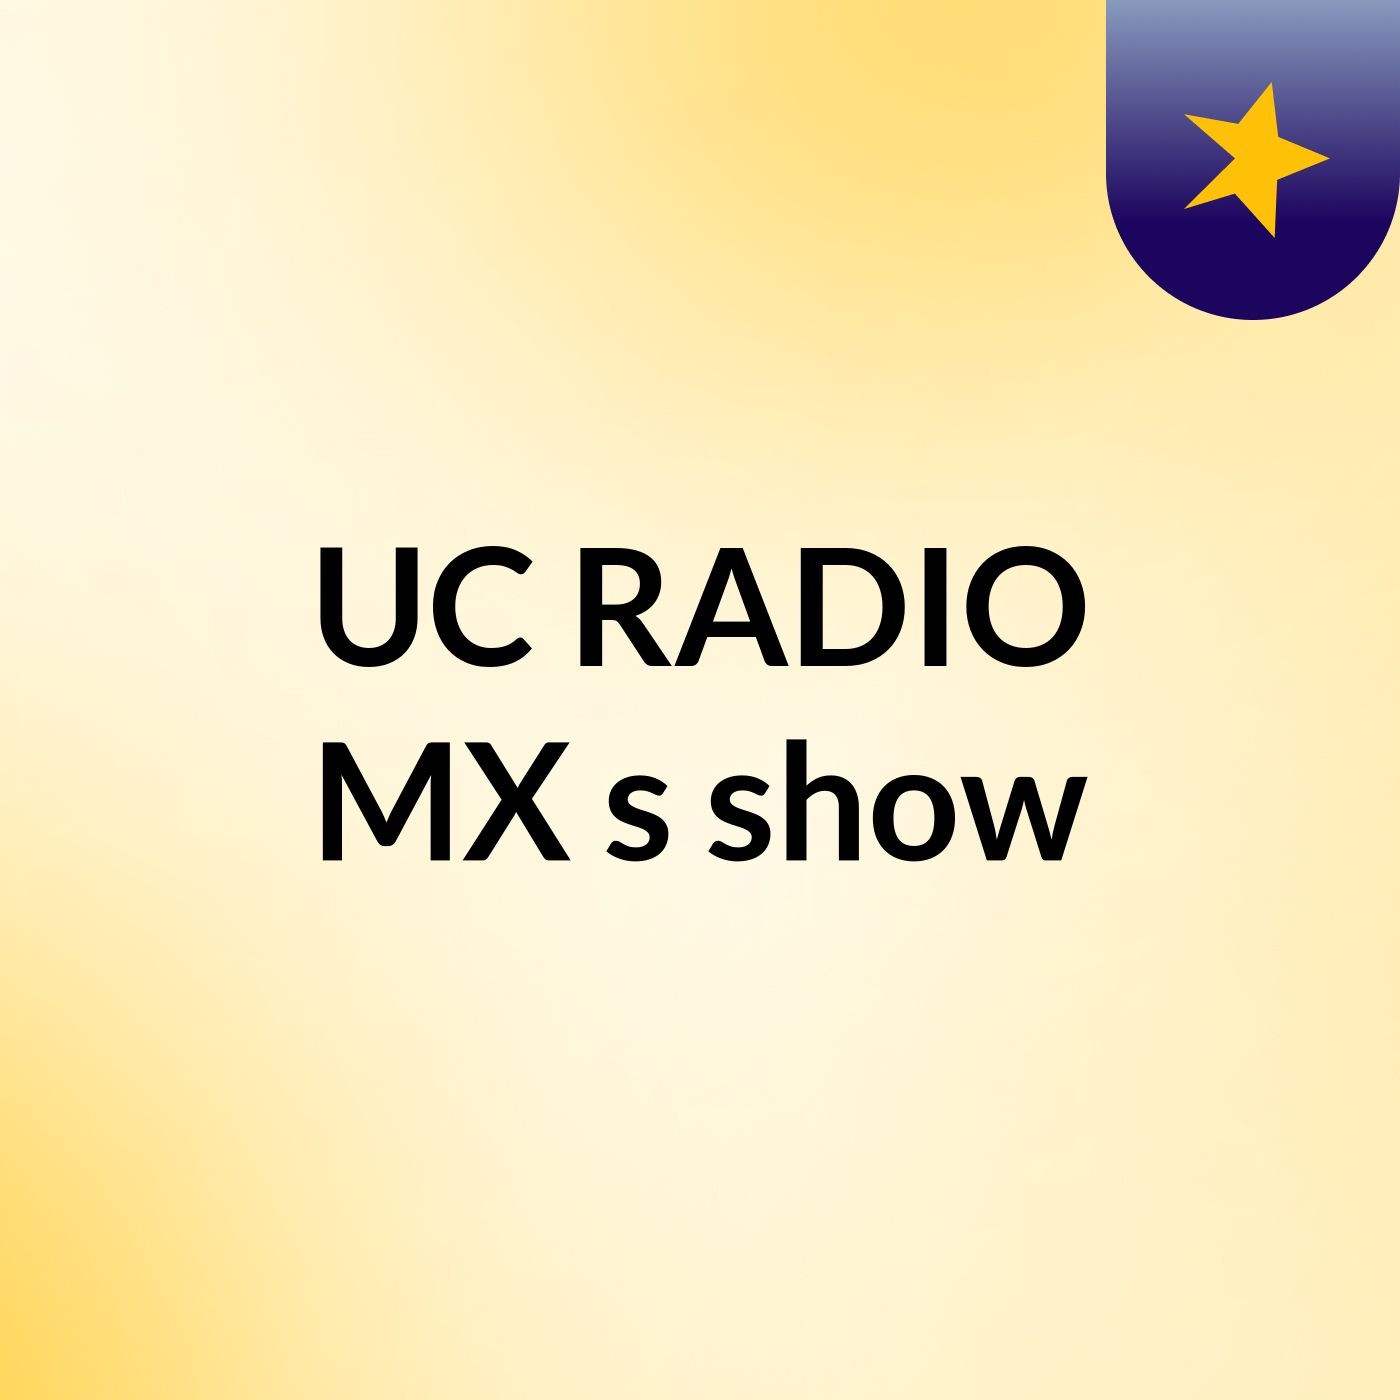 UC RADIO MX's show